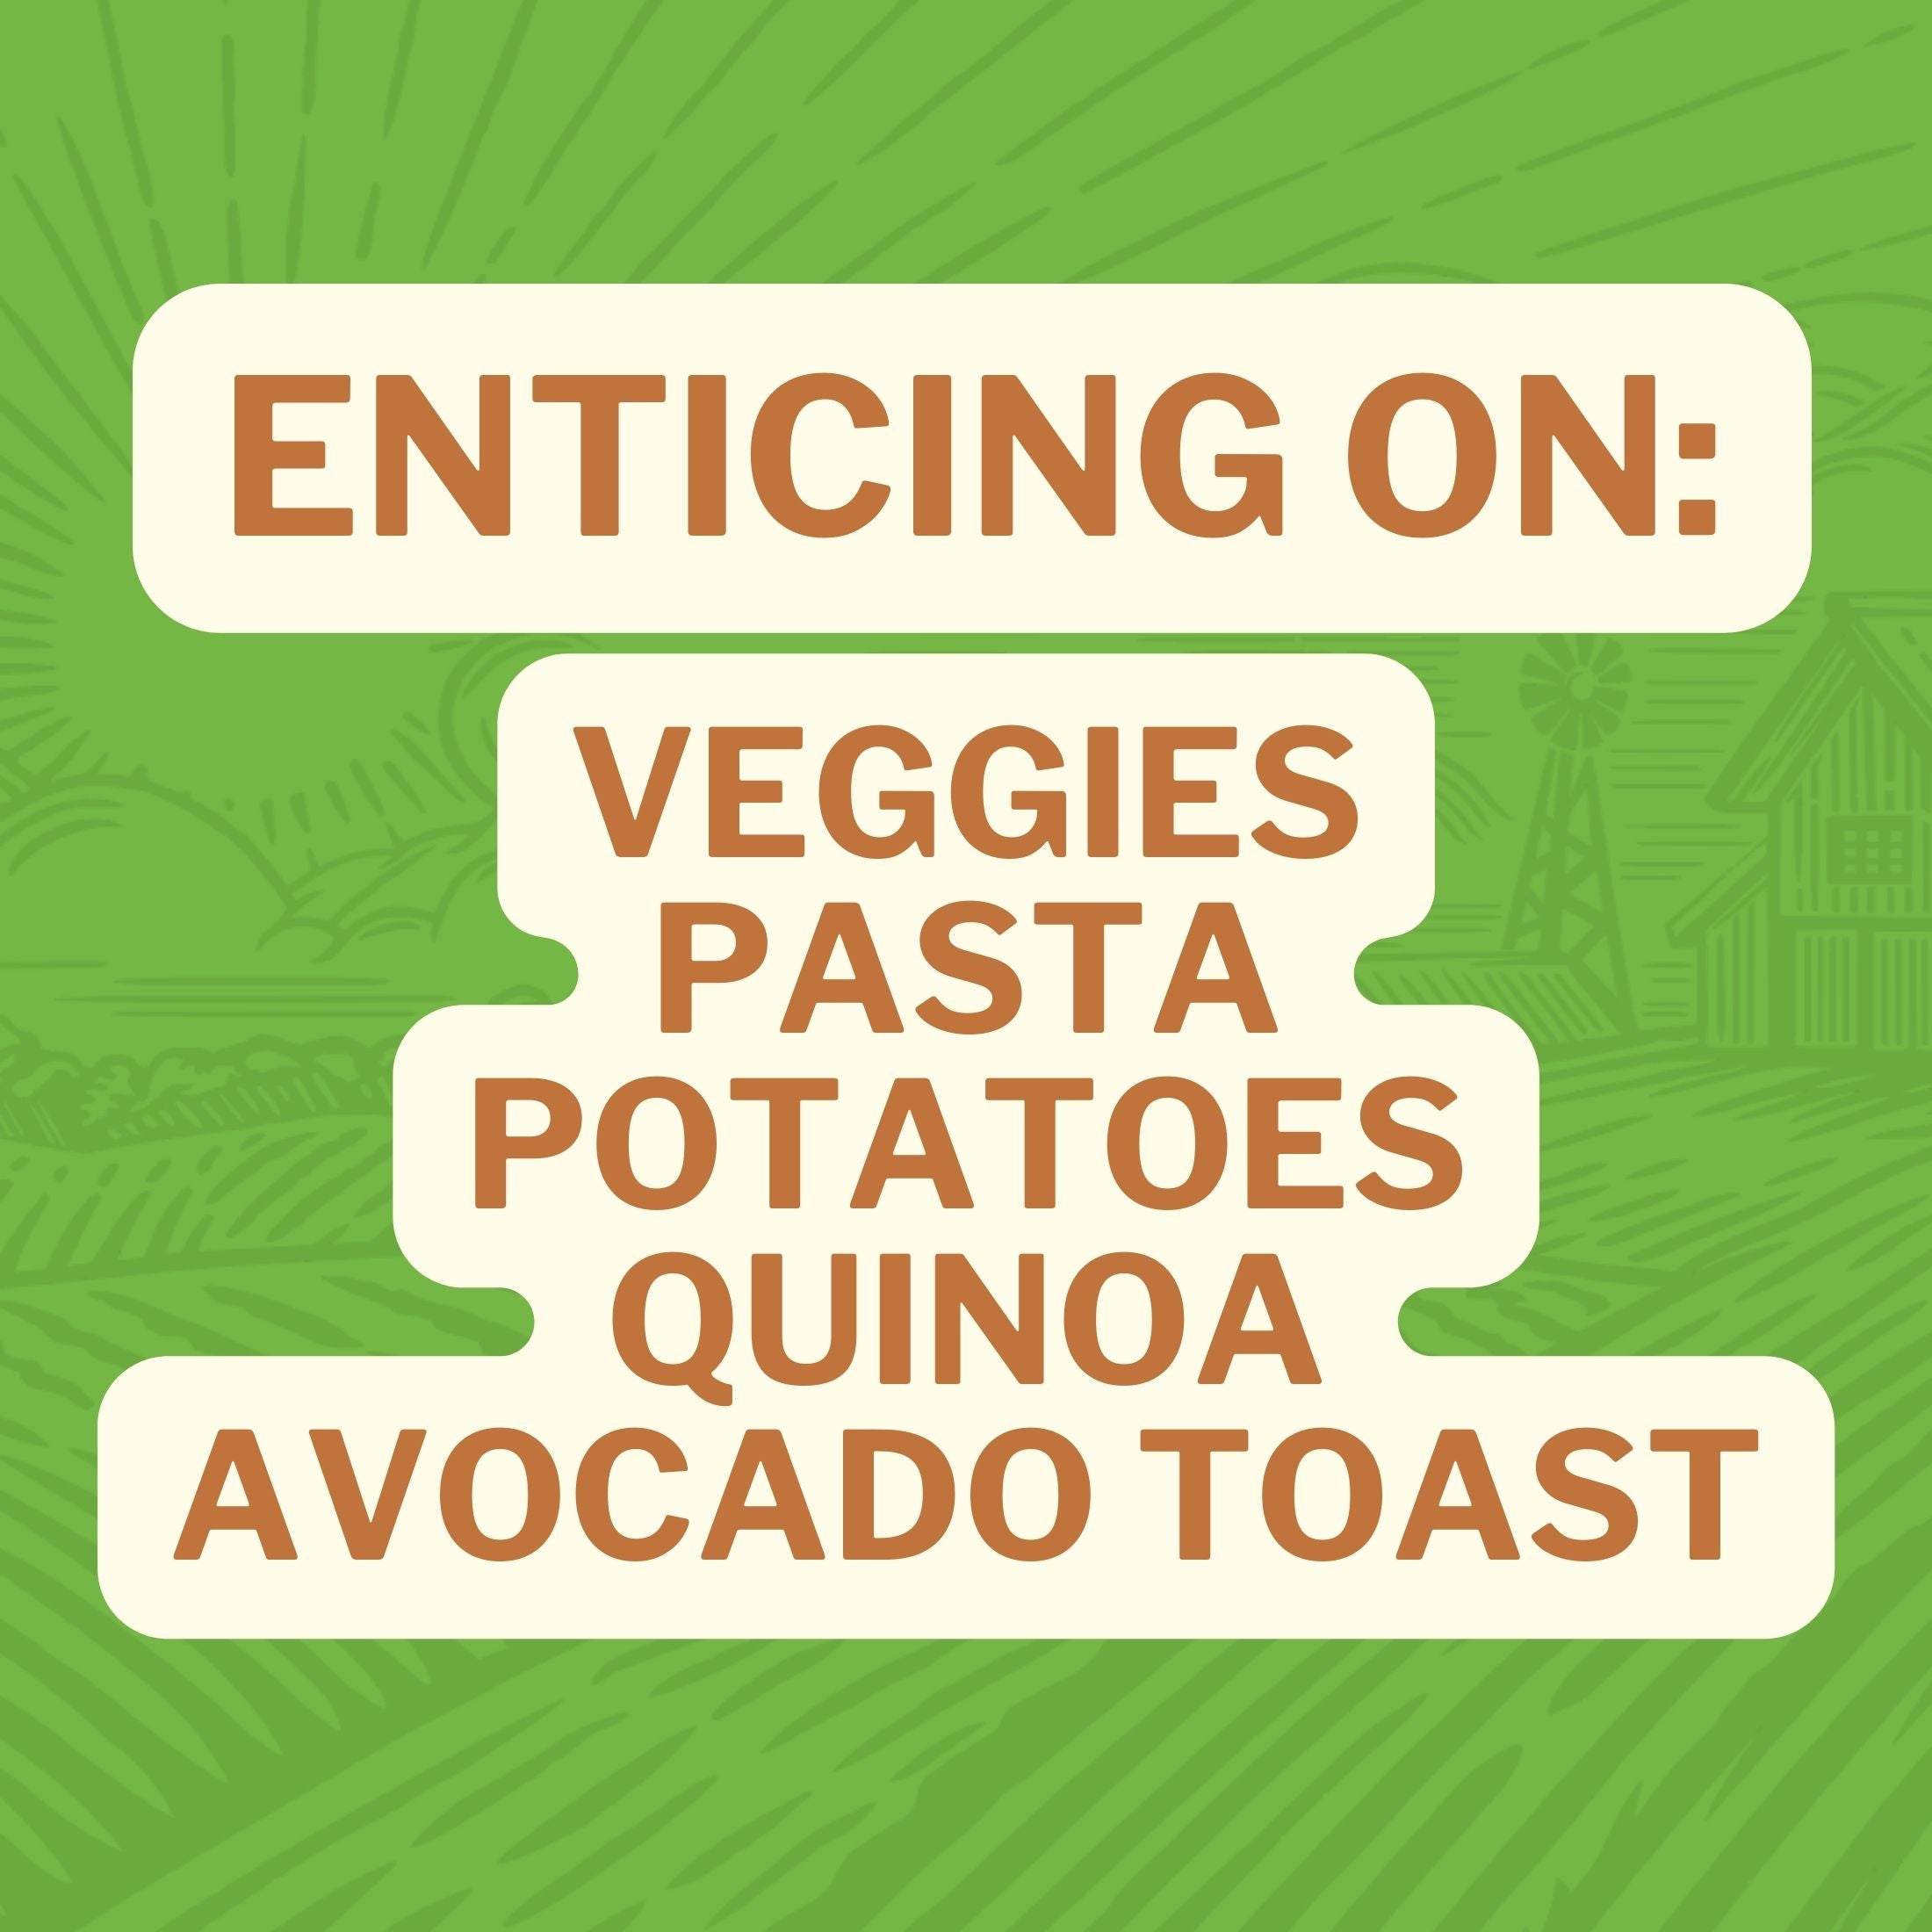 Enticing On: Veggies Pasta Potatoes Quinoa Avocado Toast